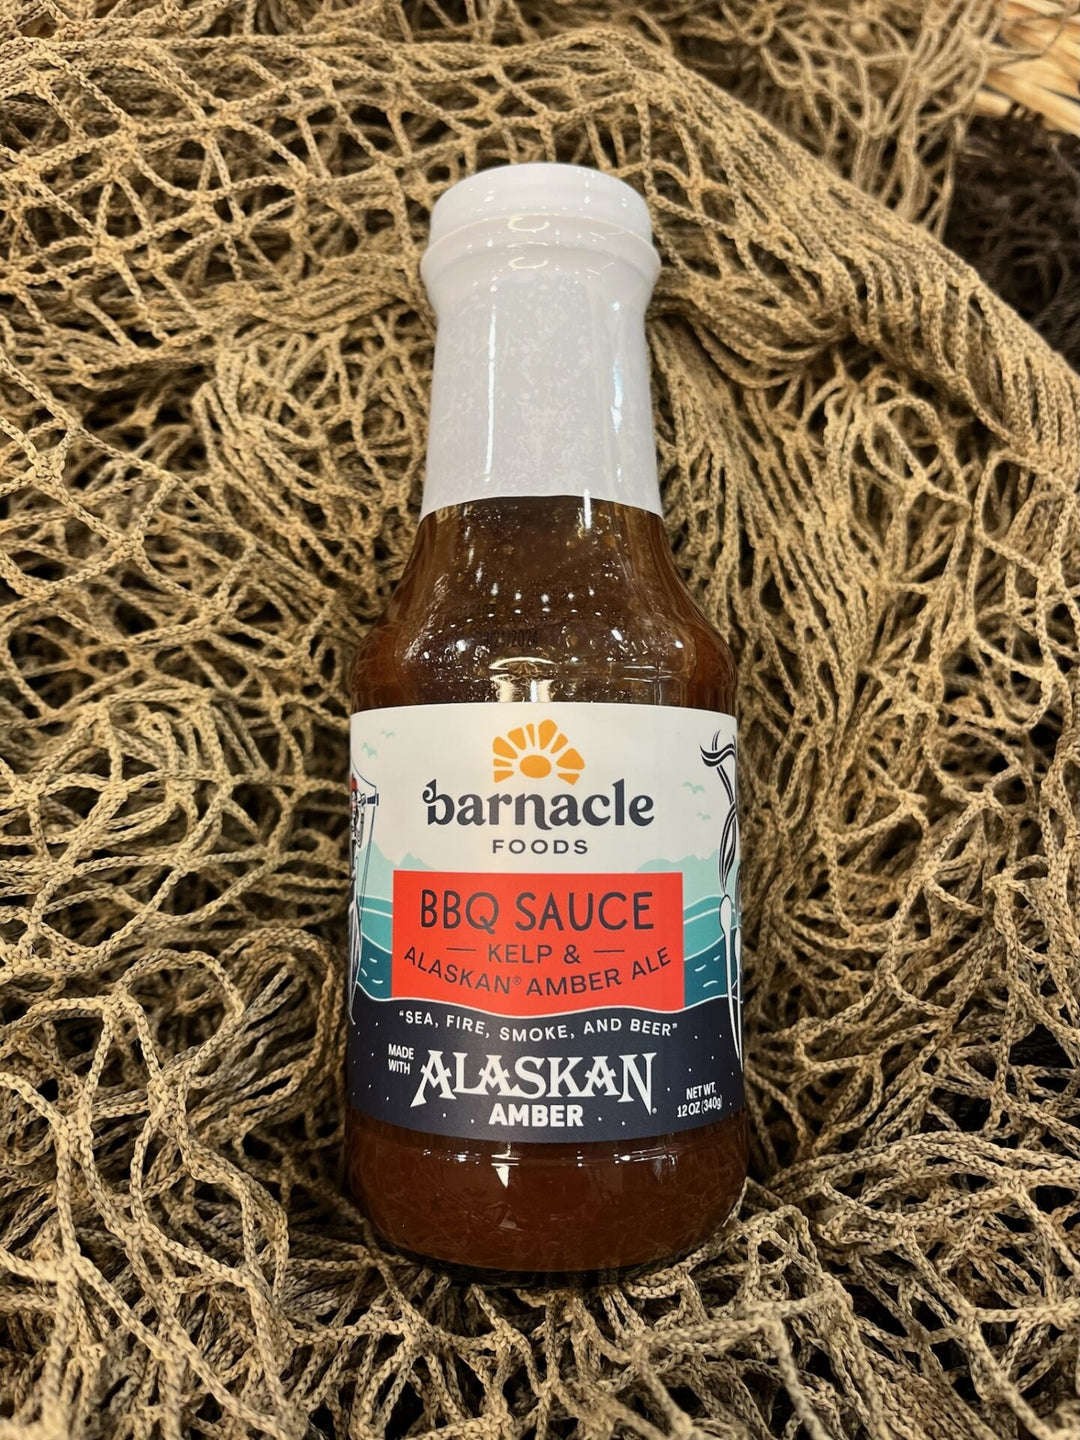 Kelp and Alaskan Amber Ale BBQ Sauce